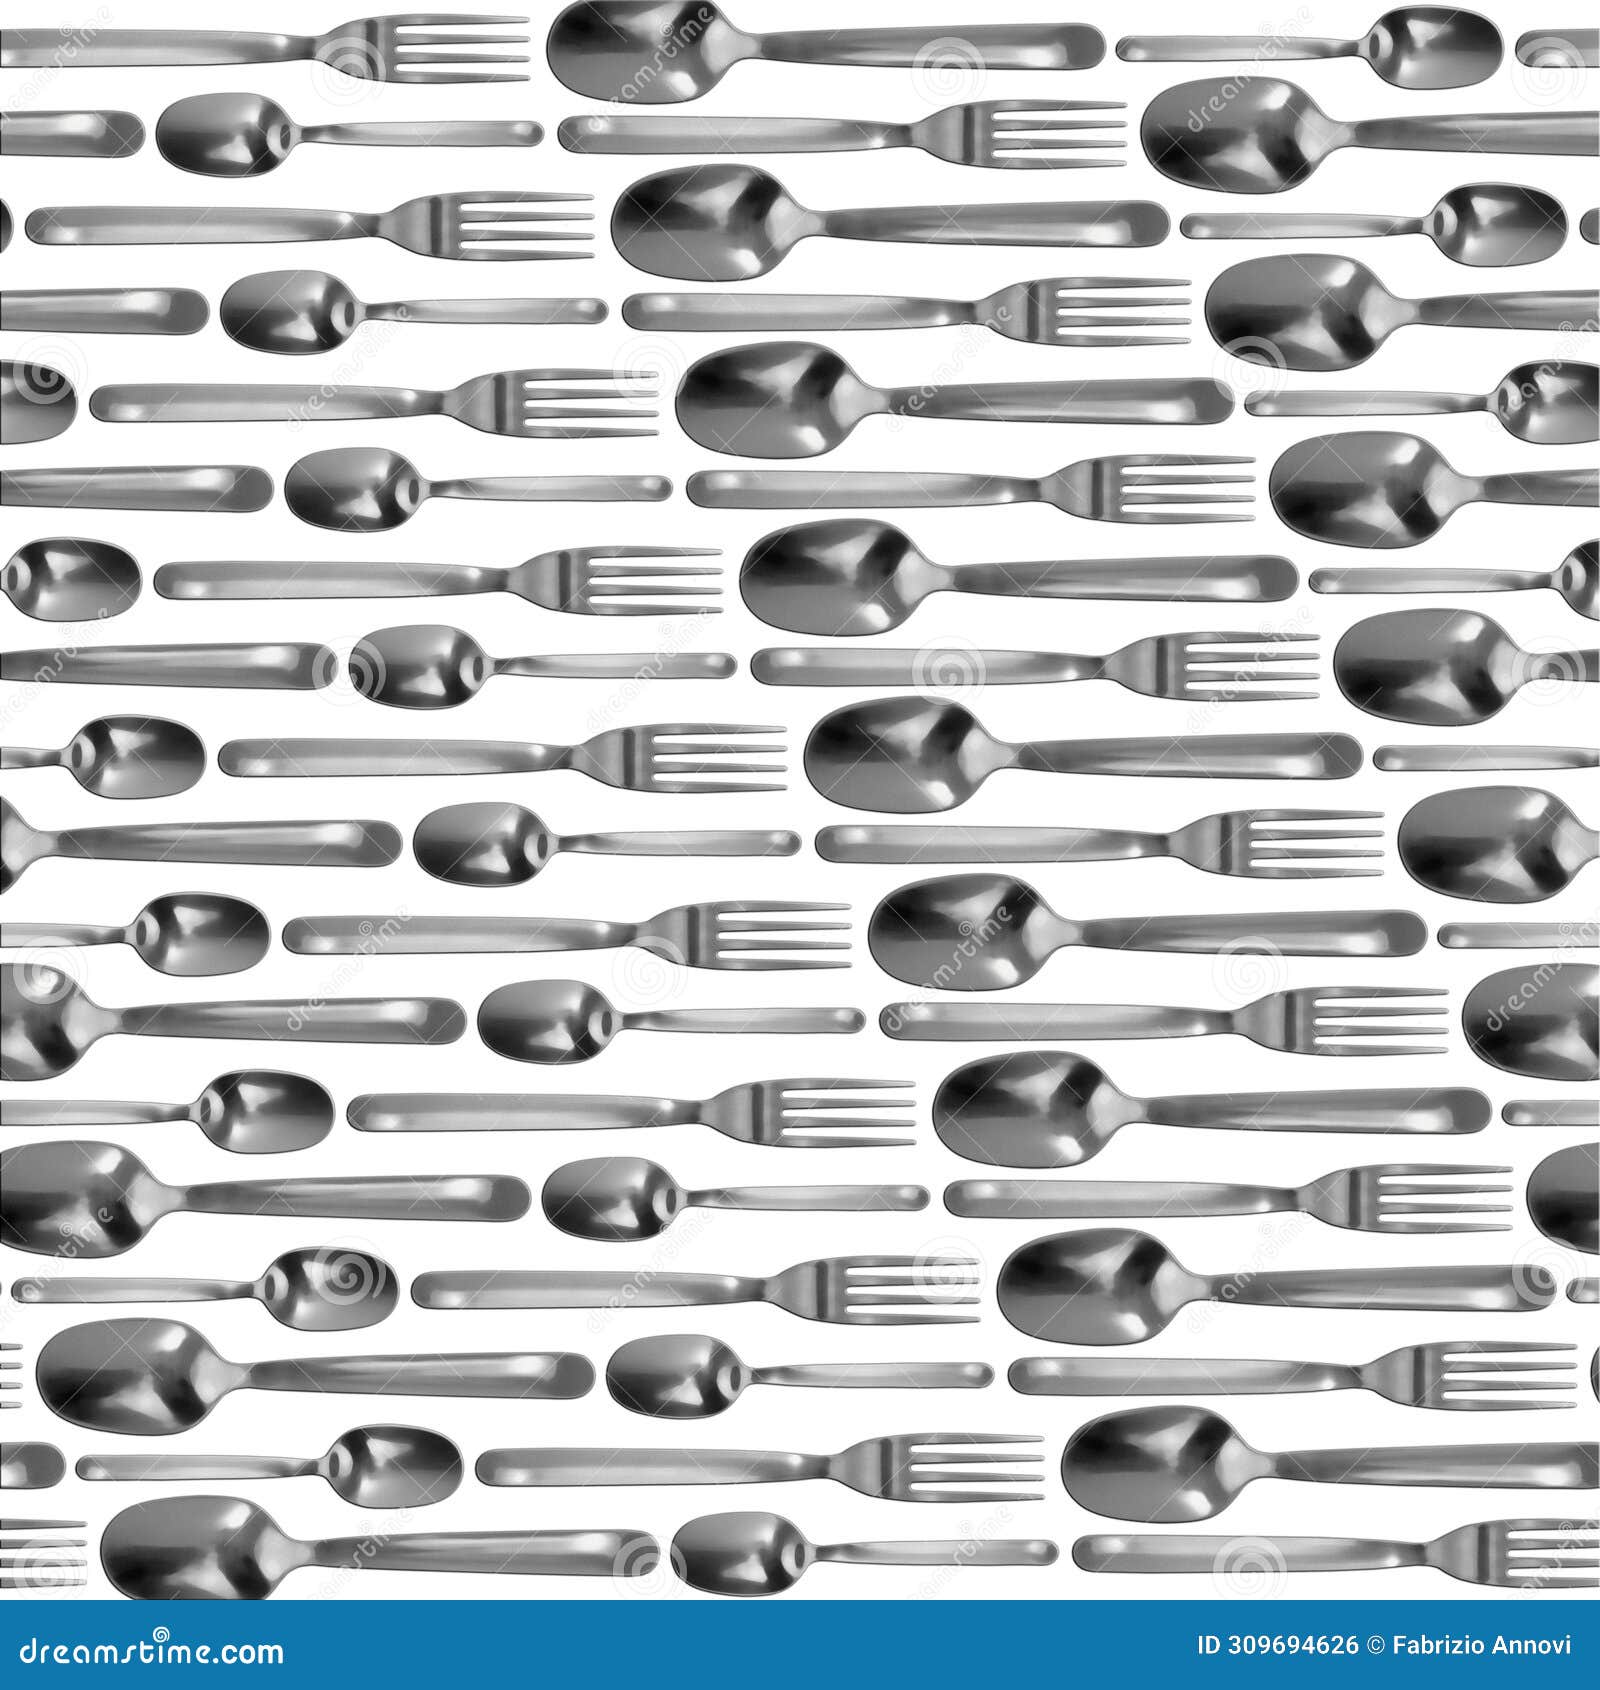 steel fork, spoon, teaspoon, restaurant and kitchen equipment